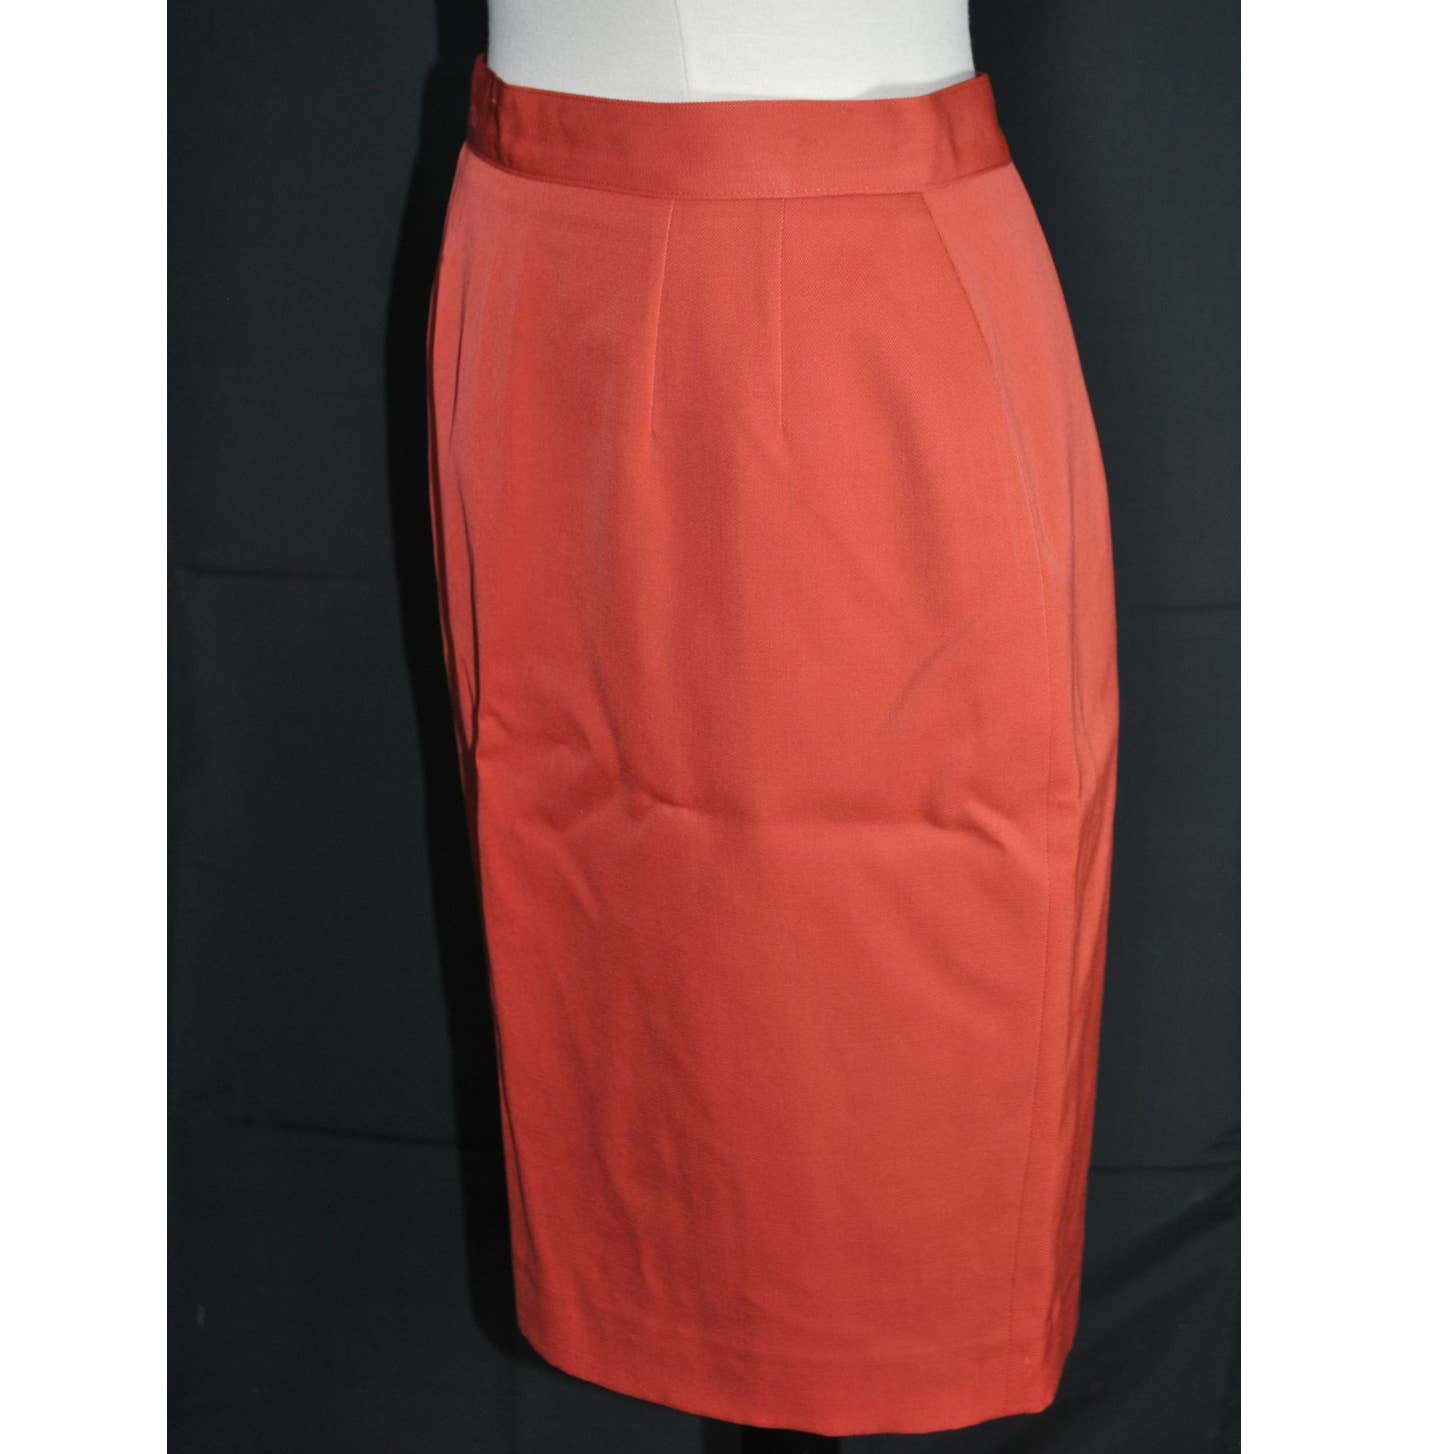 Vintage Teenflo Paris Orange Knee Length Skirt- M (no size tag)